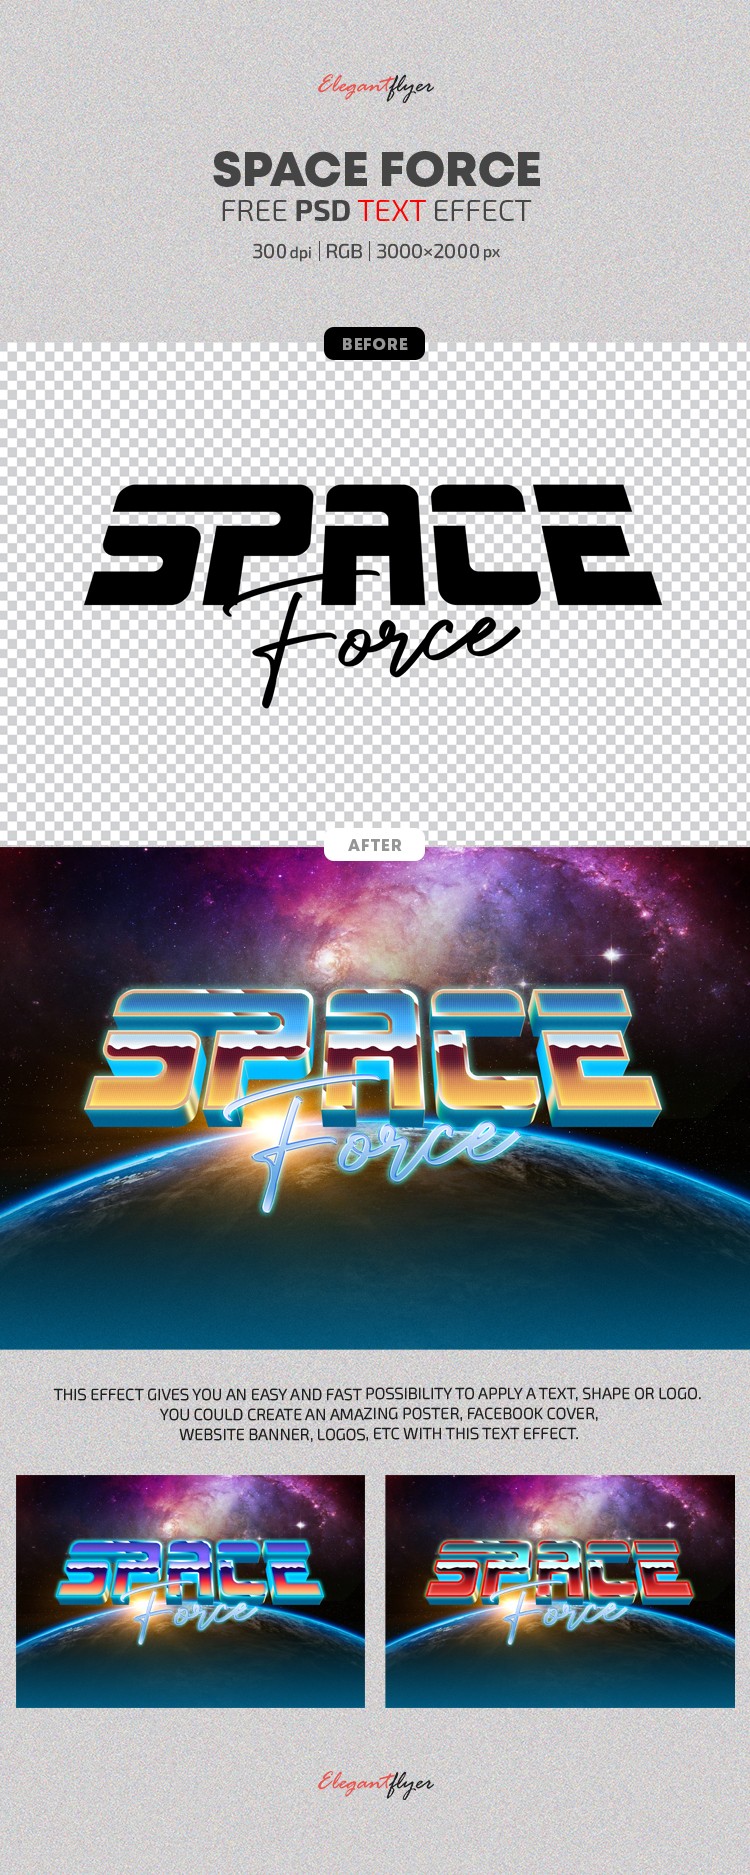 Effetto di testo Space Force by ElegantFlyer